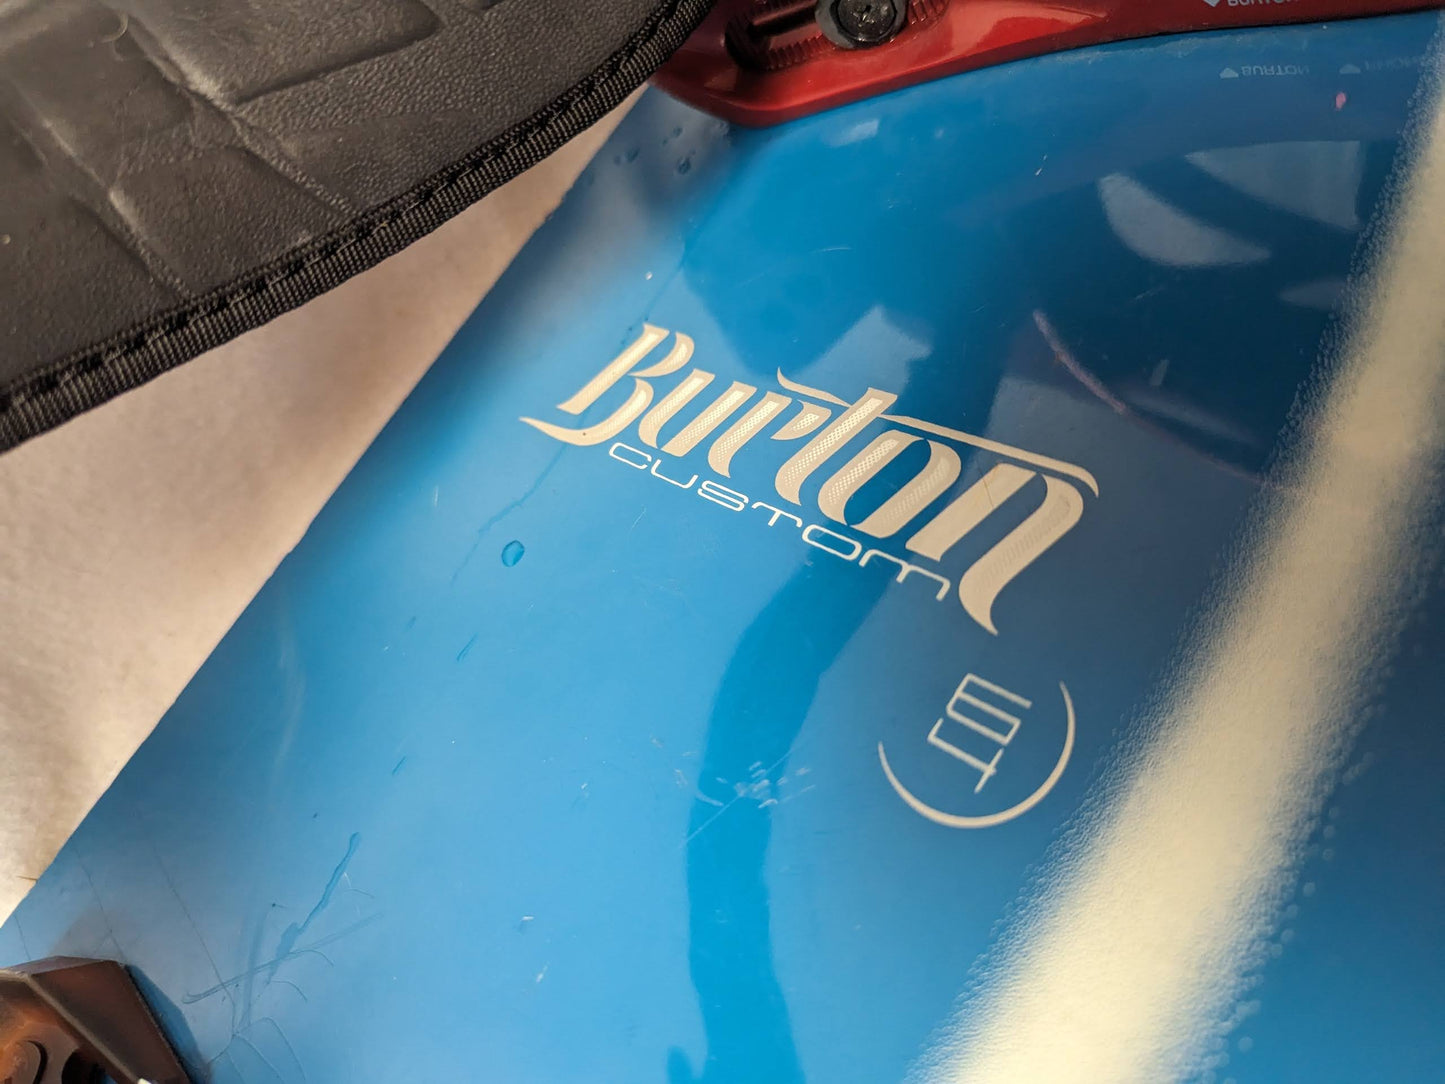 Burton Custom 64 Snowboard w/Burton Bindings (mismatched toe straps) Size 164 Cm Color Blue Condition Used